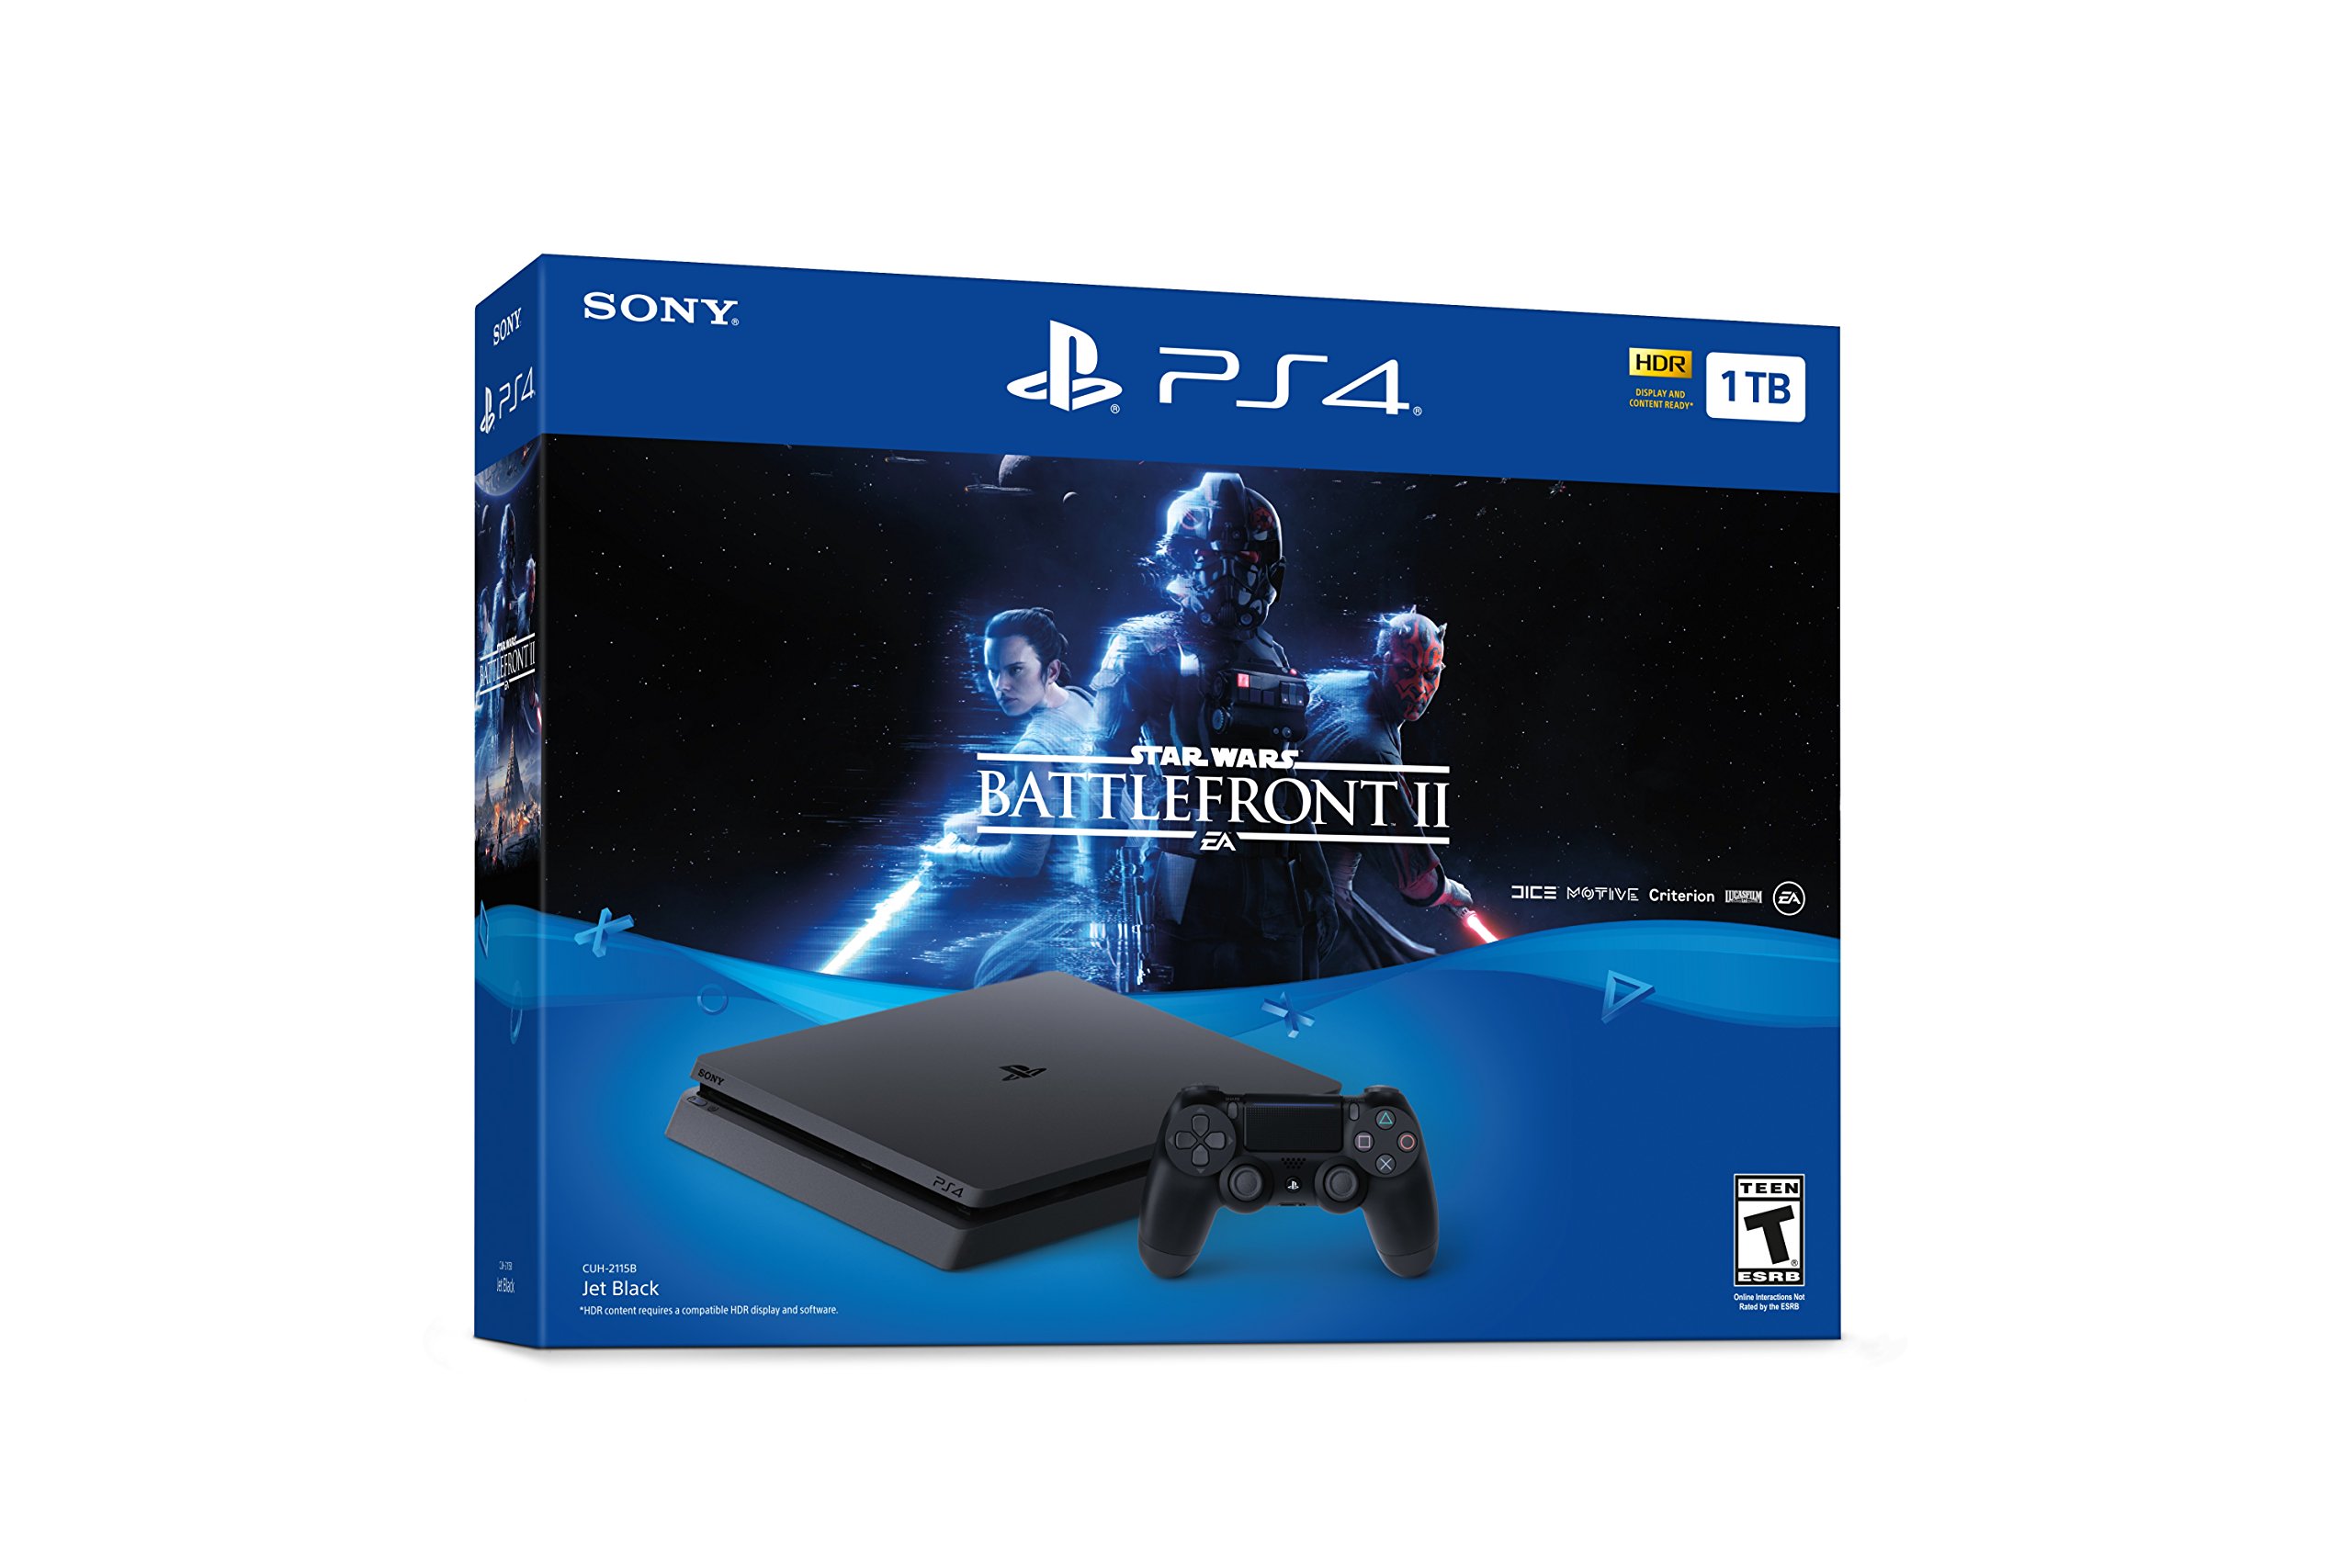 PlayStation 4 Slim 1TB Console - Star Wars Battlefront II Bundle [Discontinued]